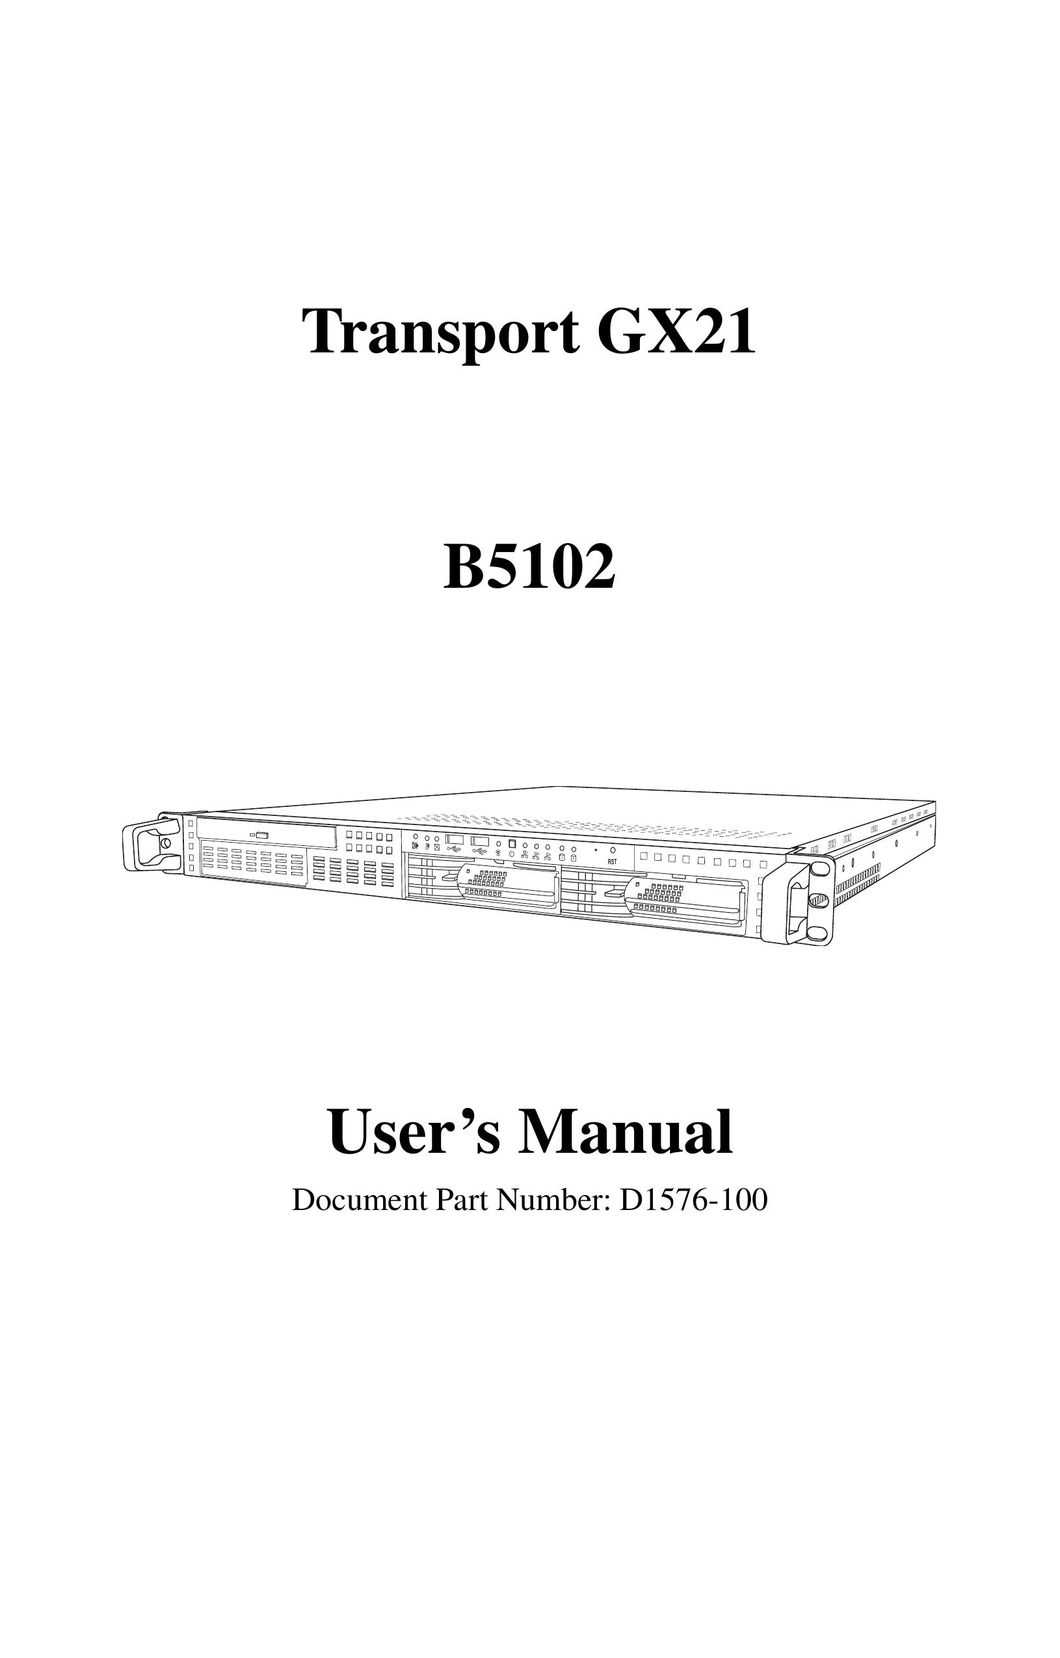 Tyan Computer B5102 Switch User Manual